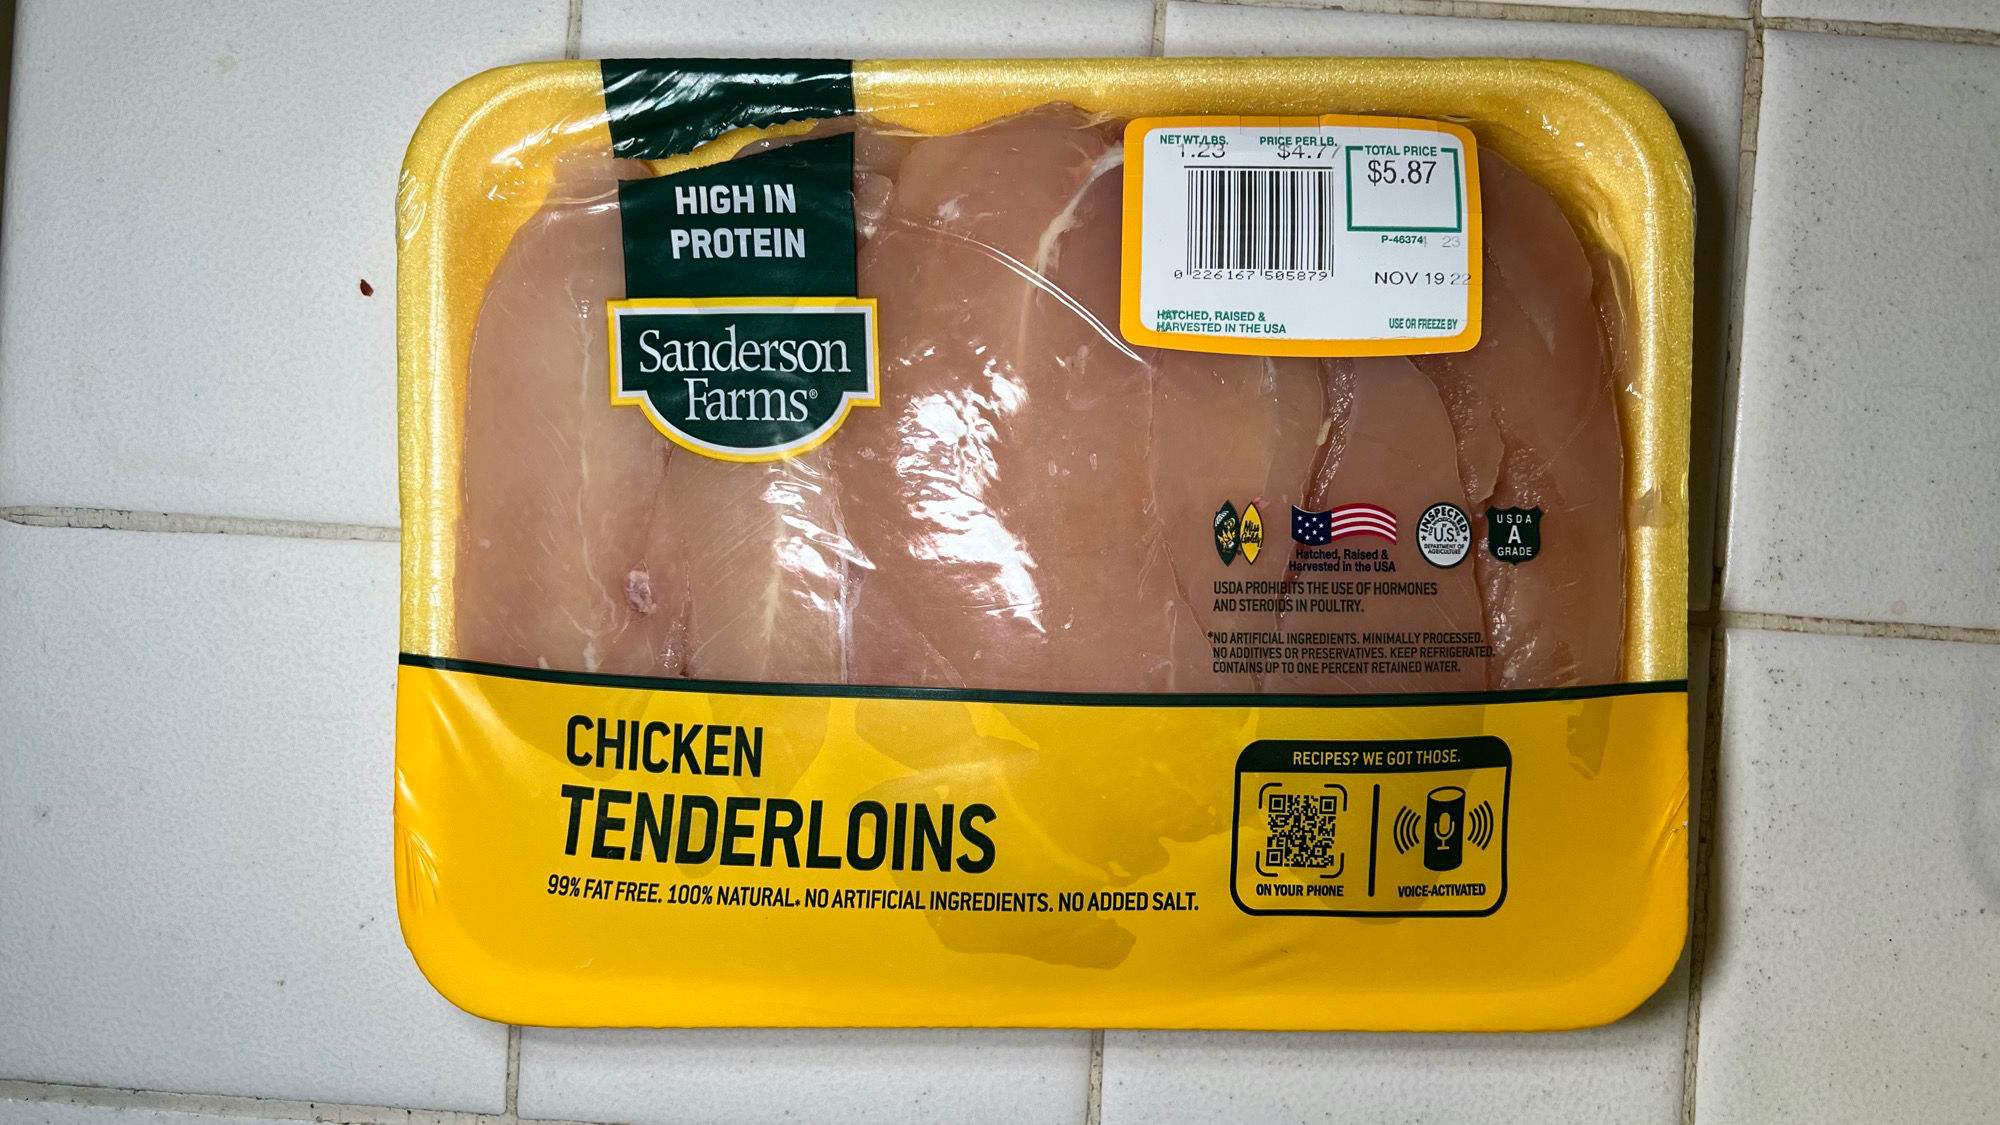 Chicken Tenderloins Sanderson Farms